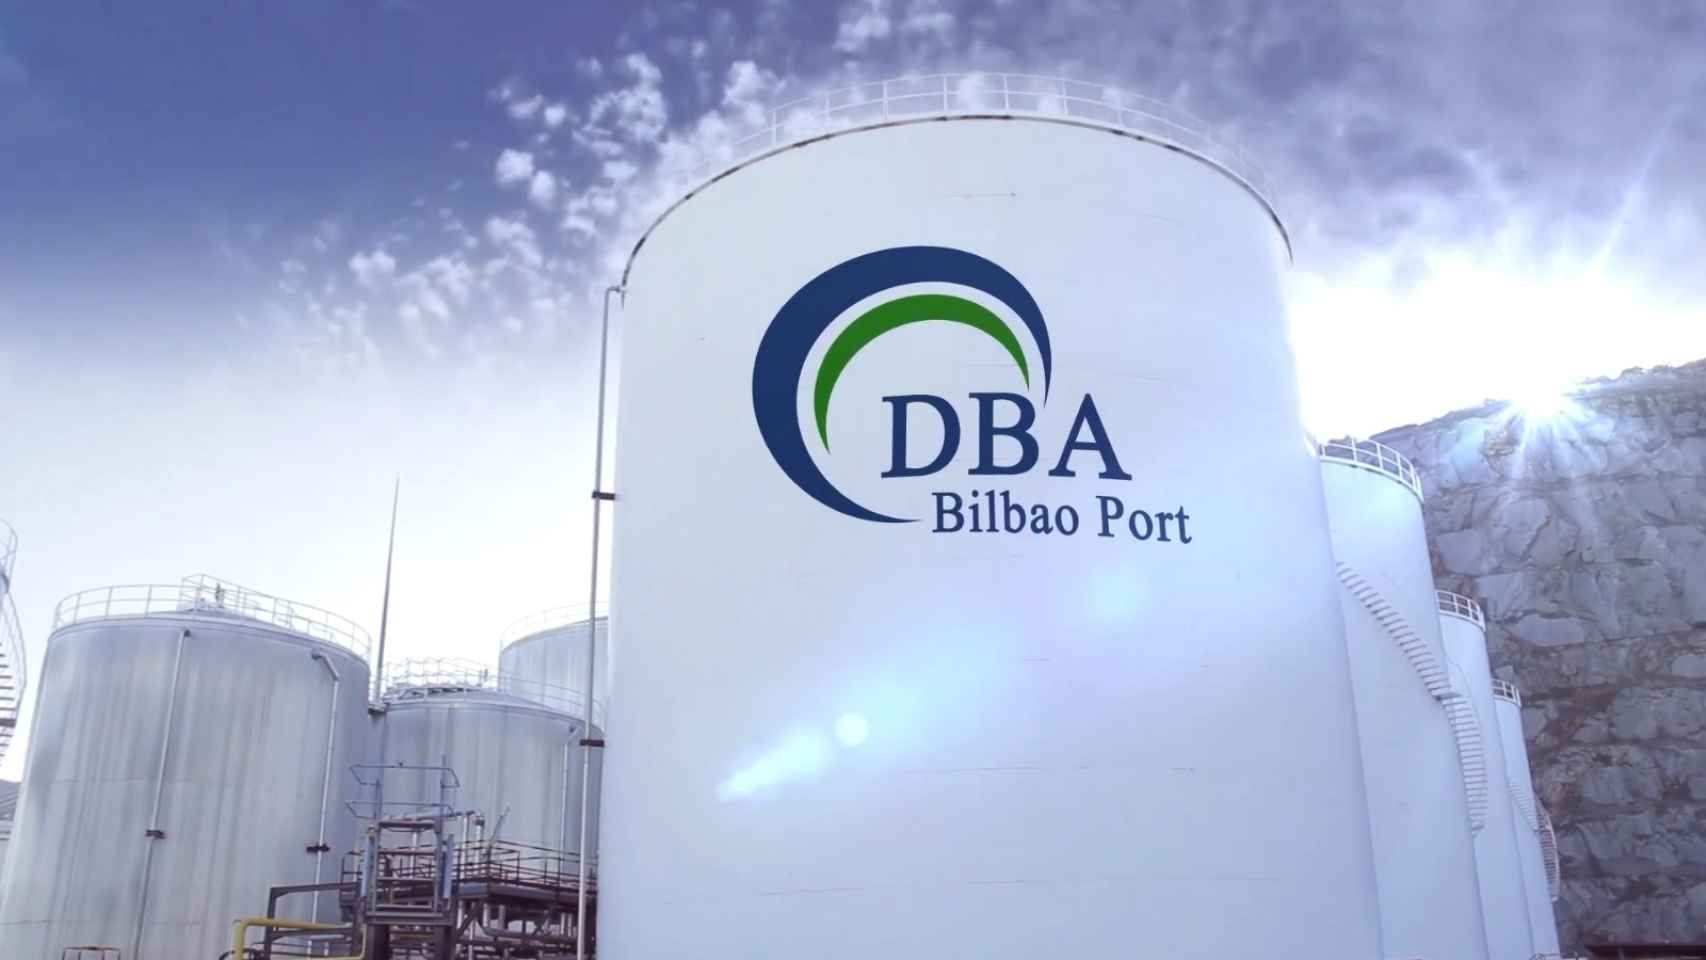 DBA Bilbao Port